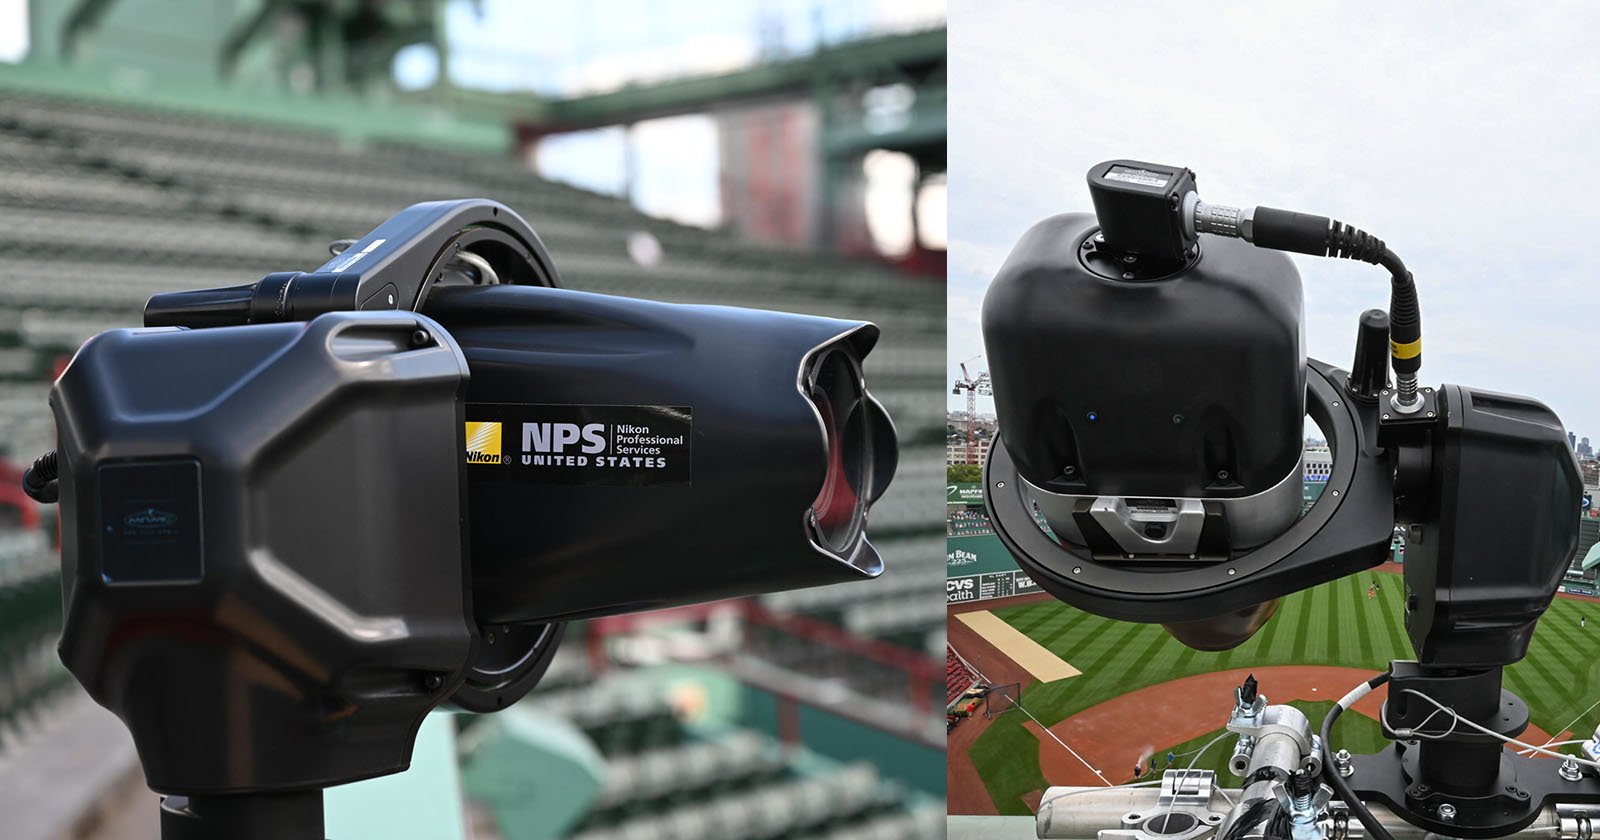 Robotic Nikon D5 DSLRs Installed at Boston Red Sox’s Fenway Park